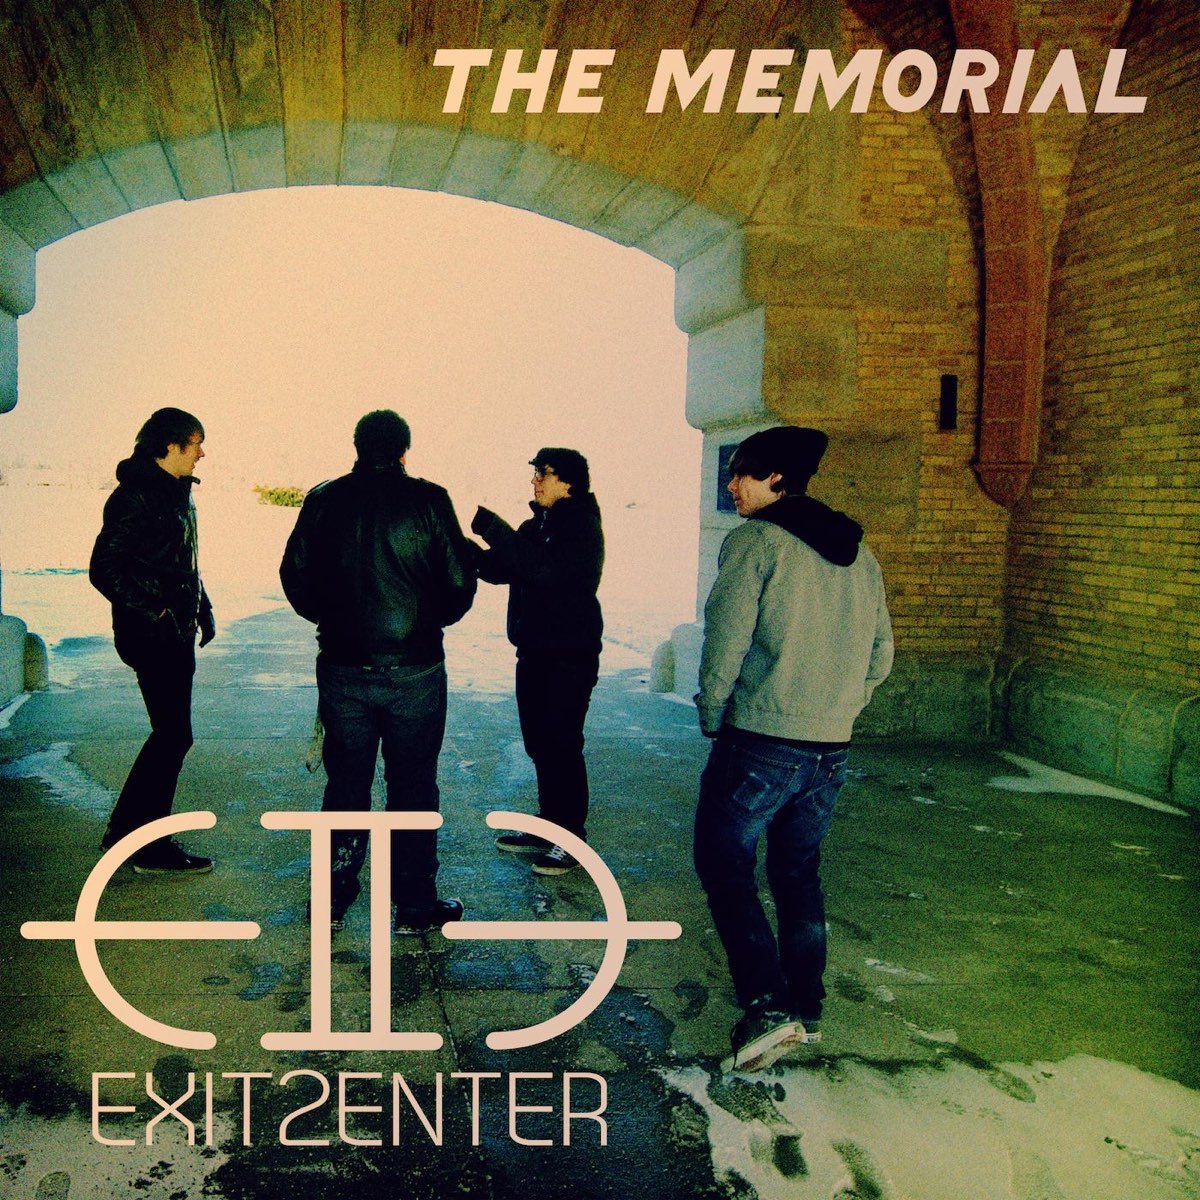 Second exiting. Enter музыка. Песня exit. Memory.